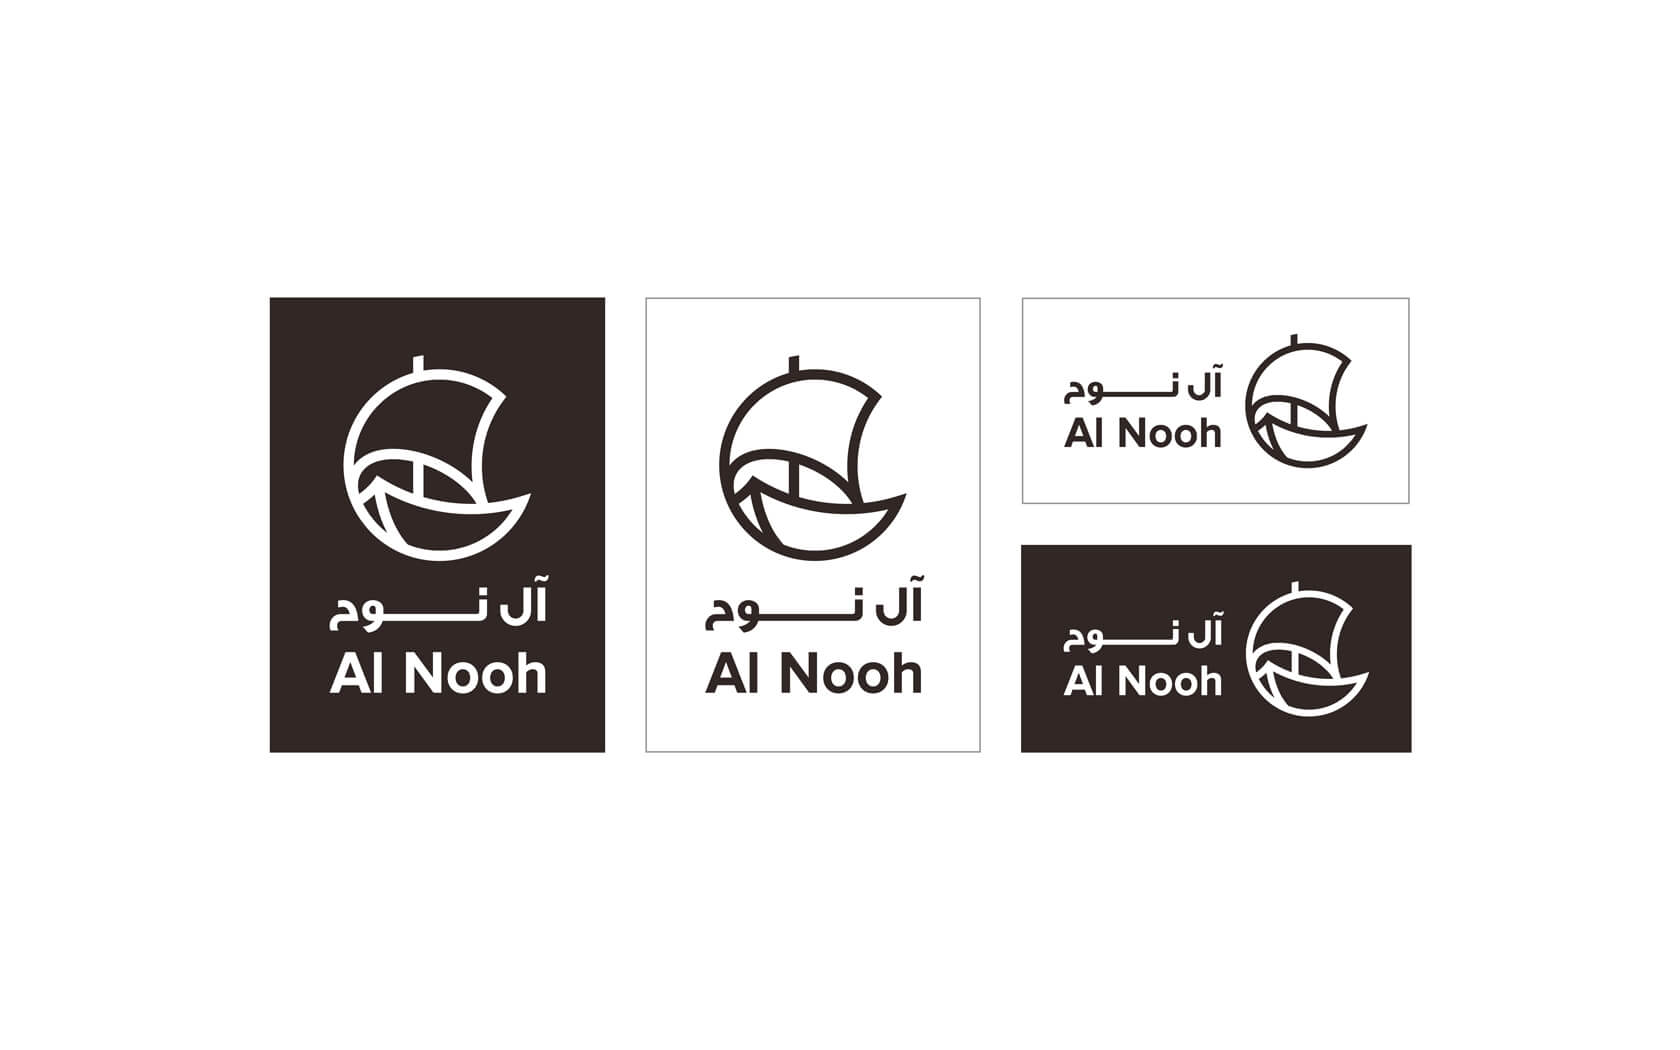 Al Nooh. Brand logo in horizontal and vertical lockup